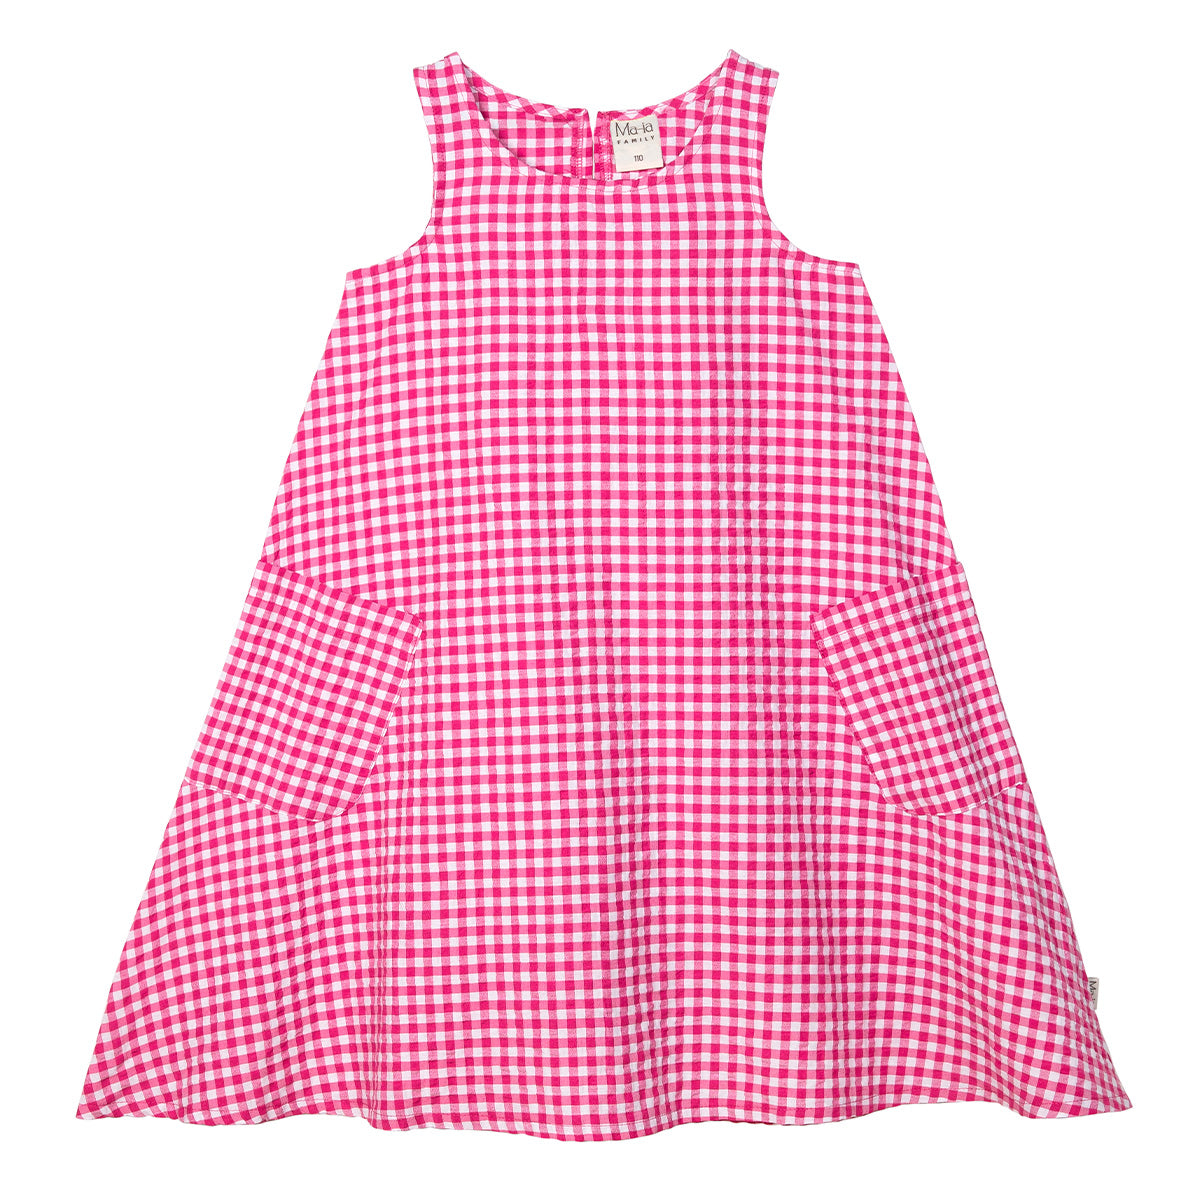 Plaid Dress, pink